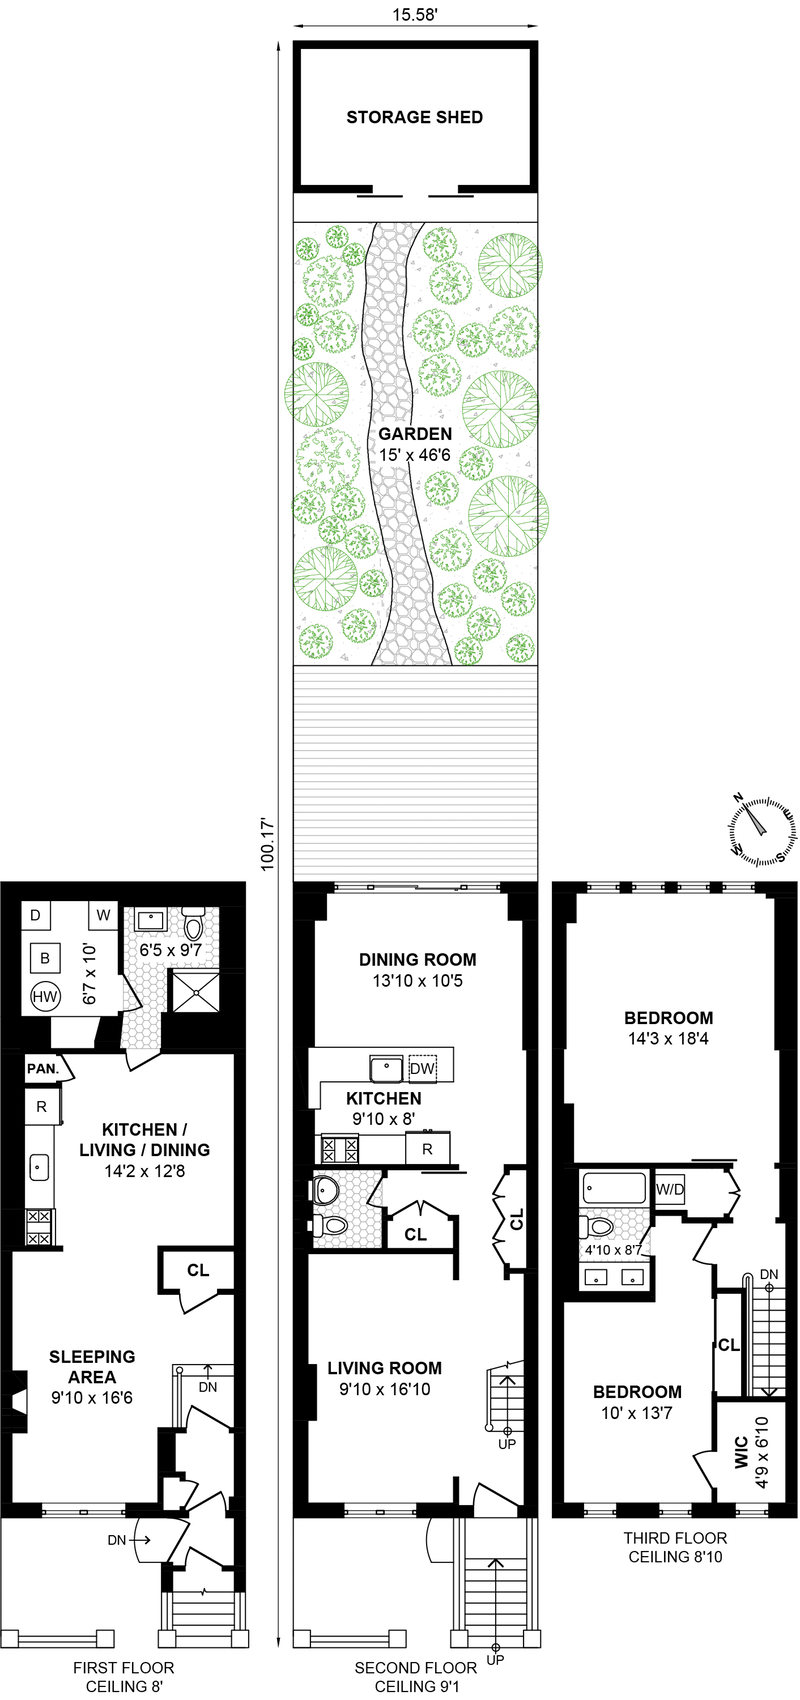 Floorplan for 259 19th Street